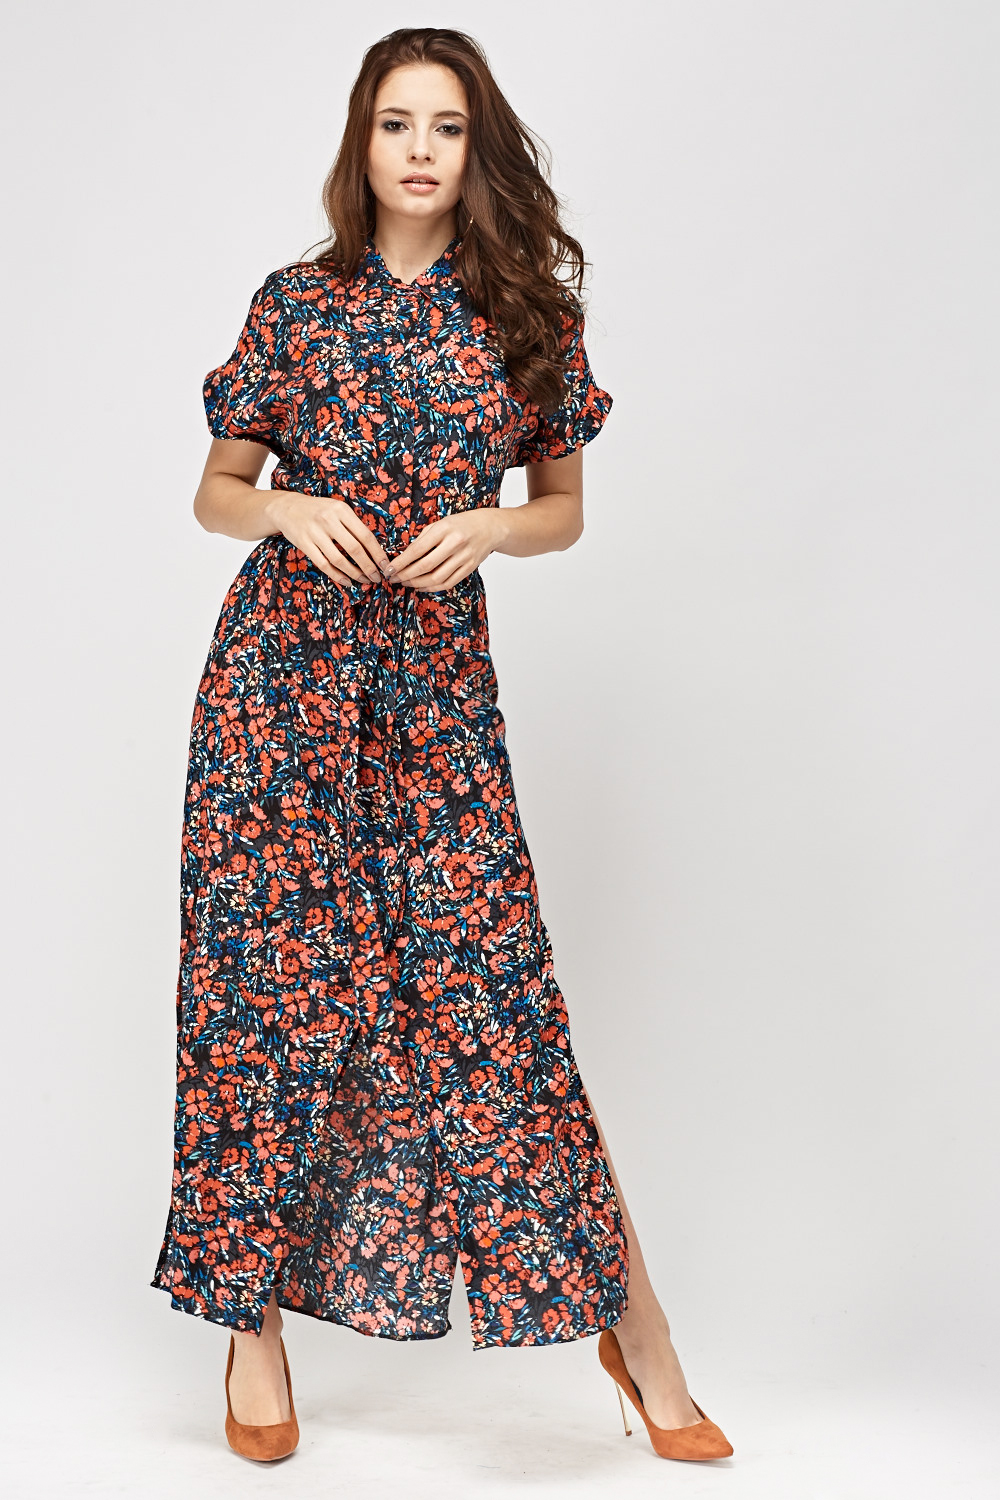 Button Up Floral Maxi Dress - Just $6